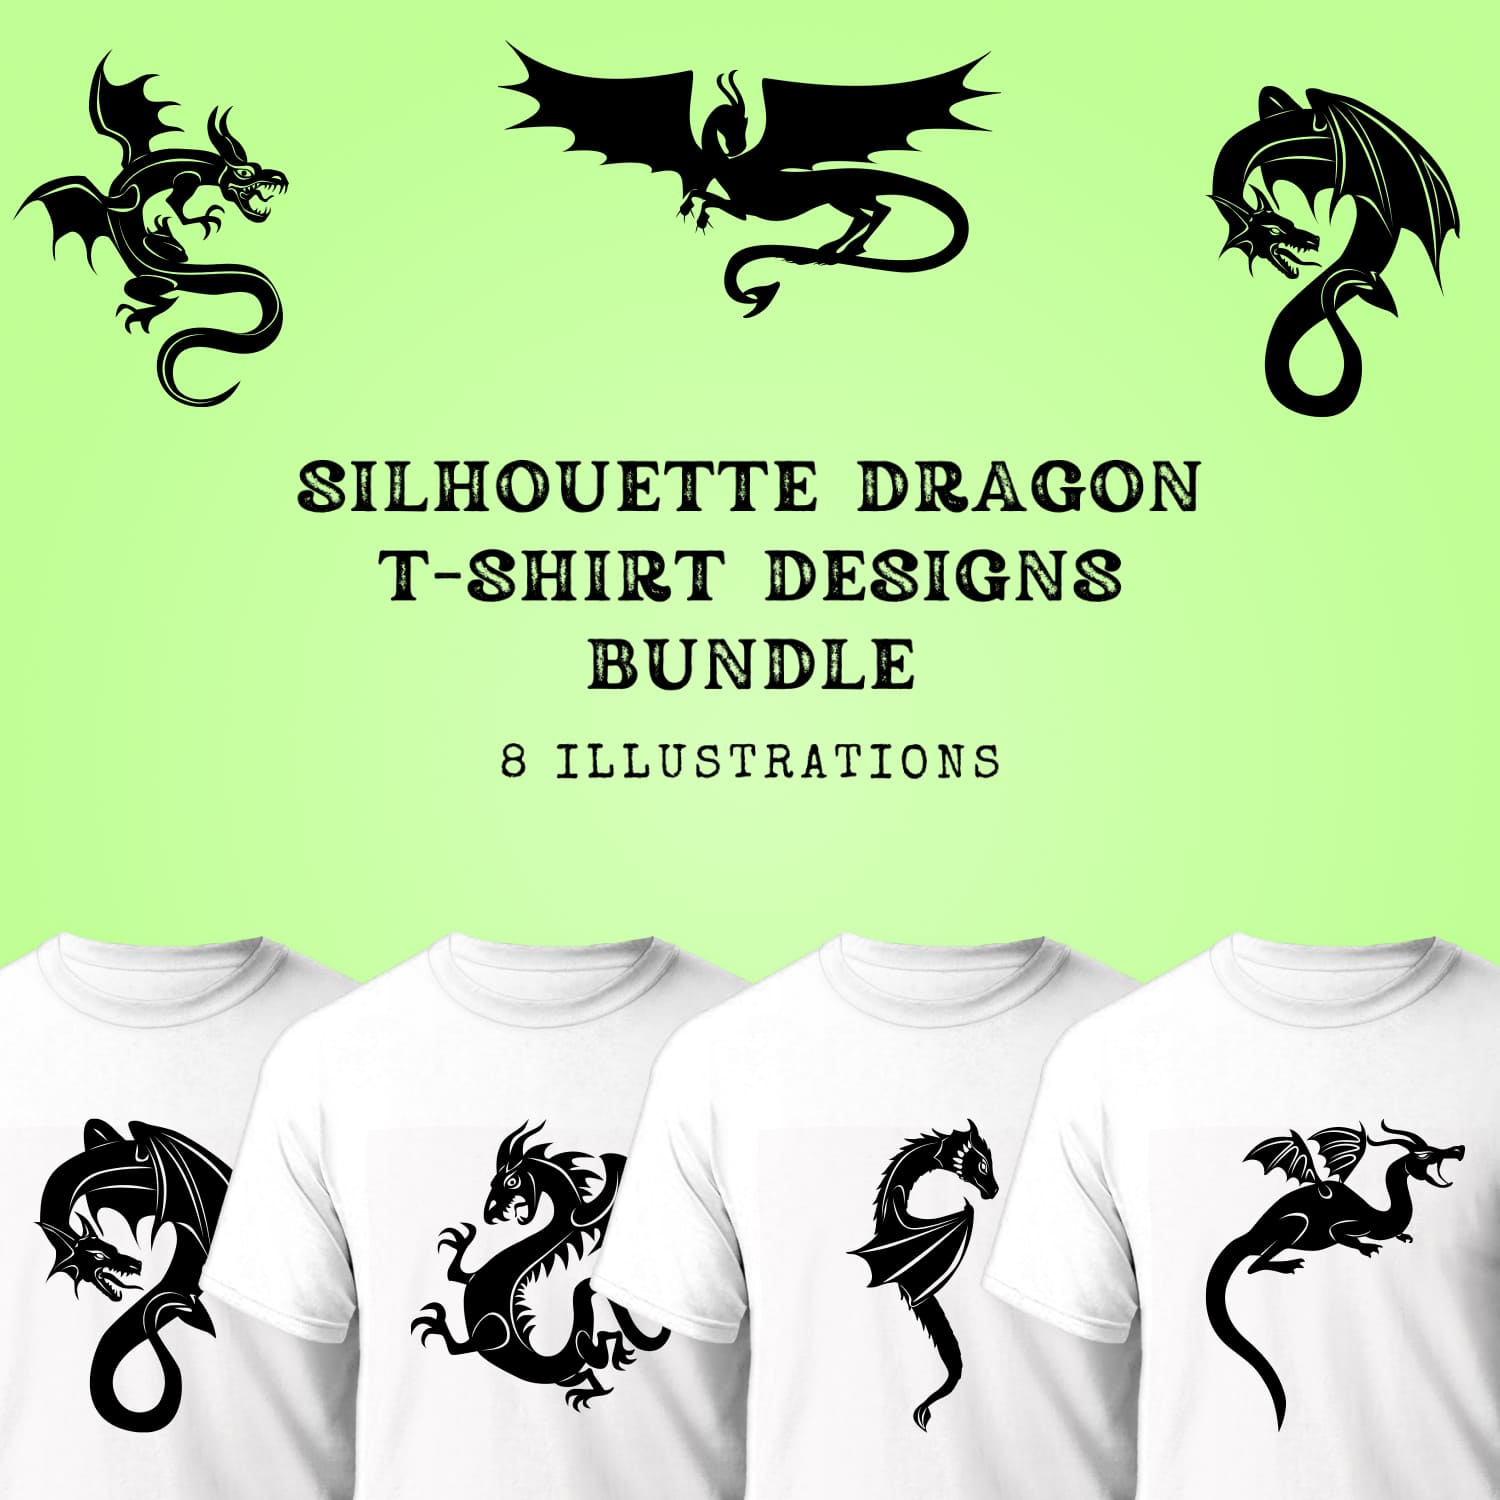 Silhouette Dragon T-shirt Designs Bundle.